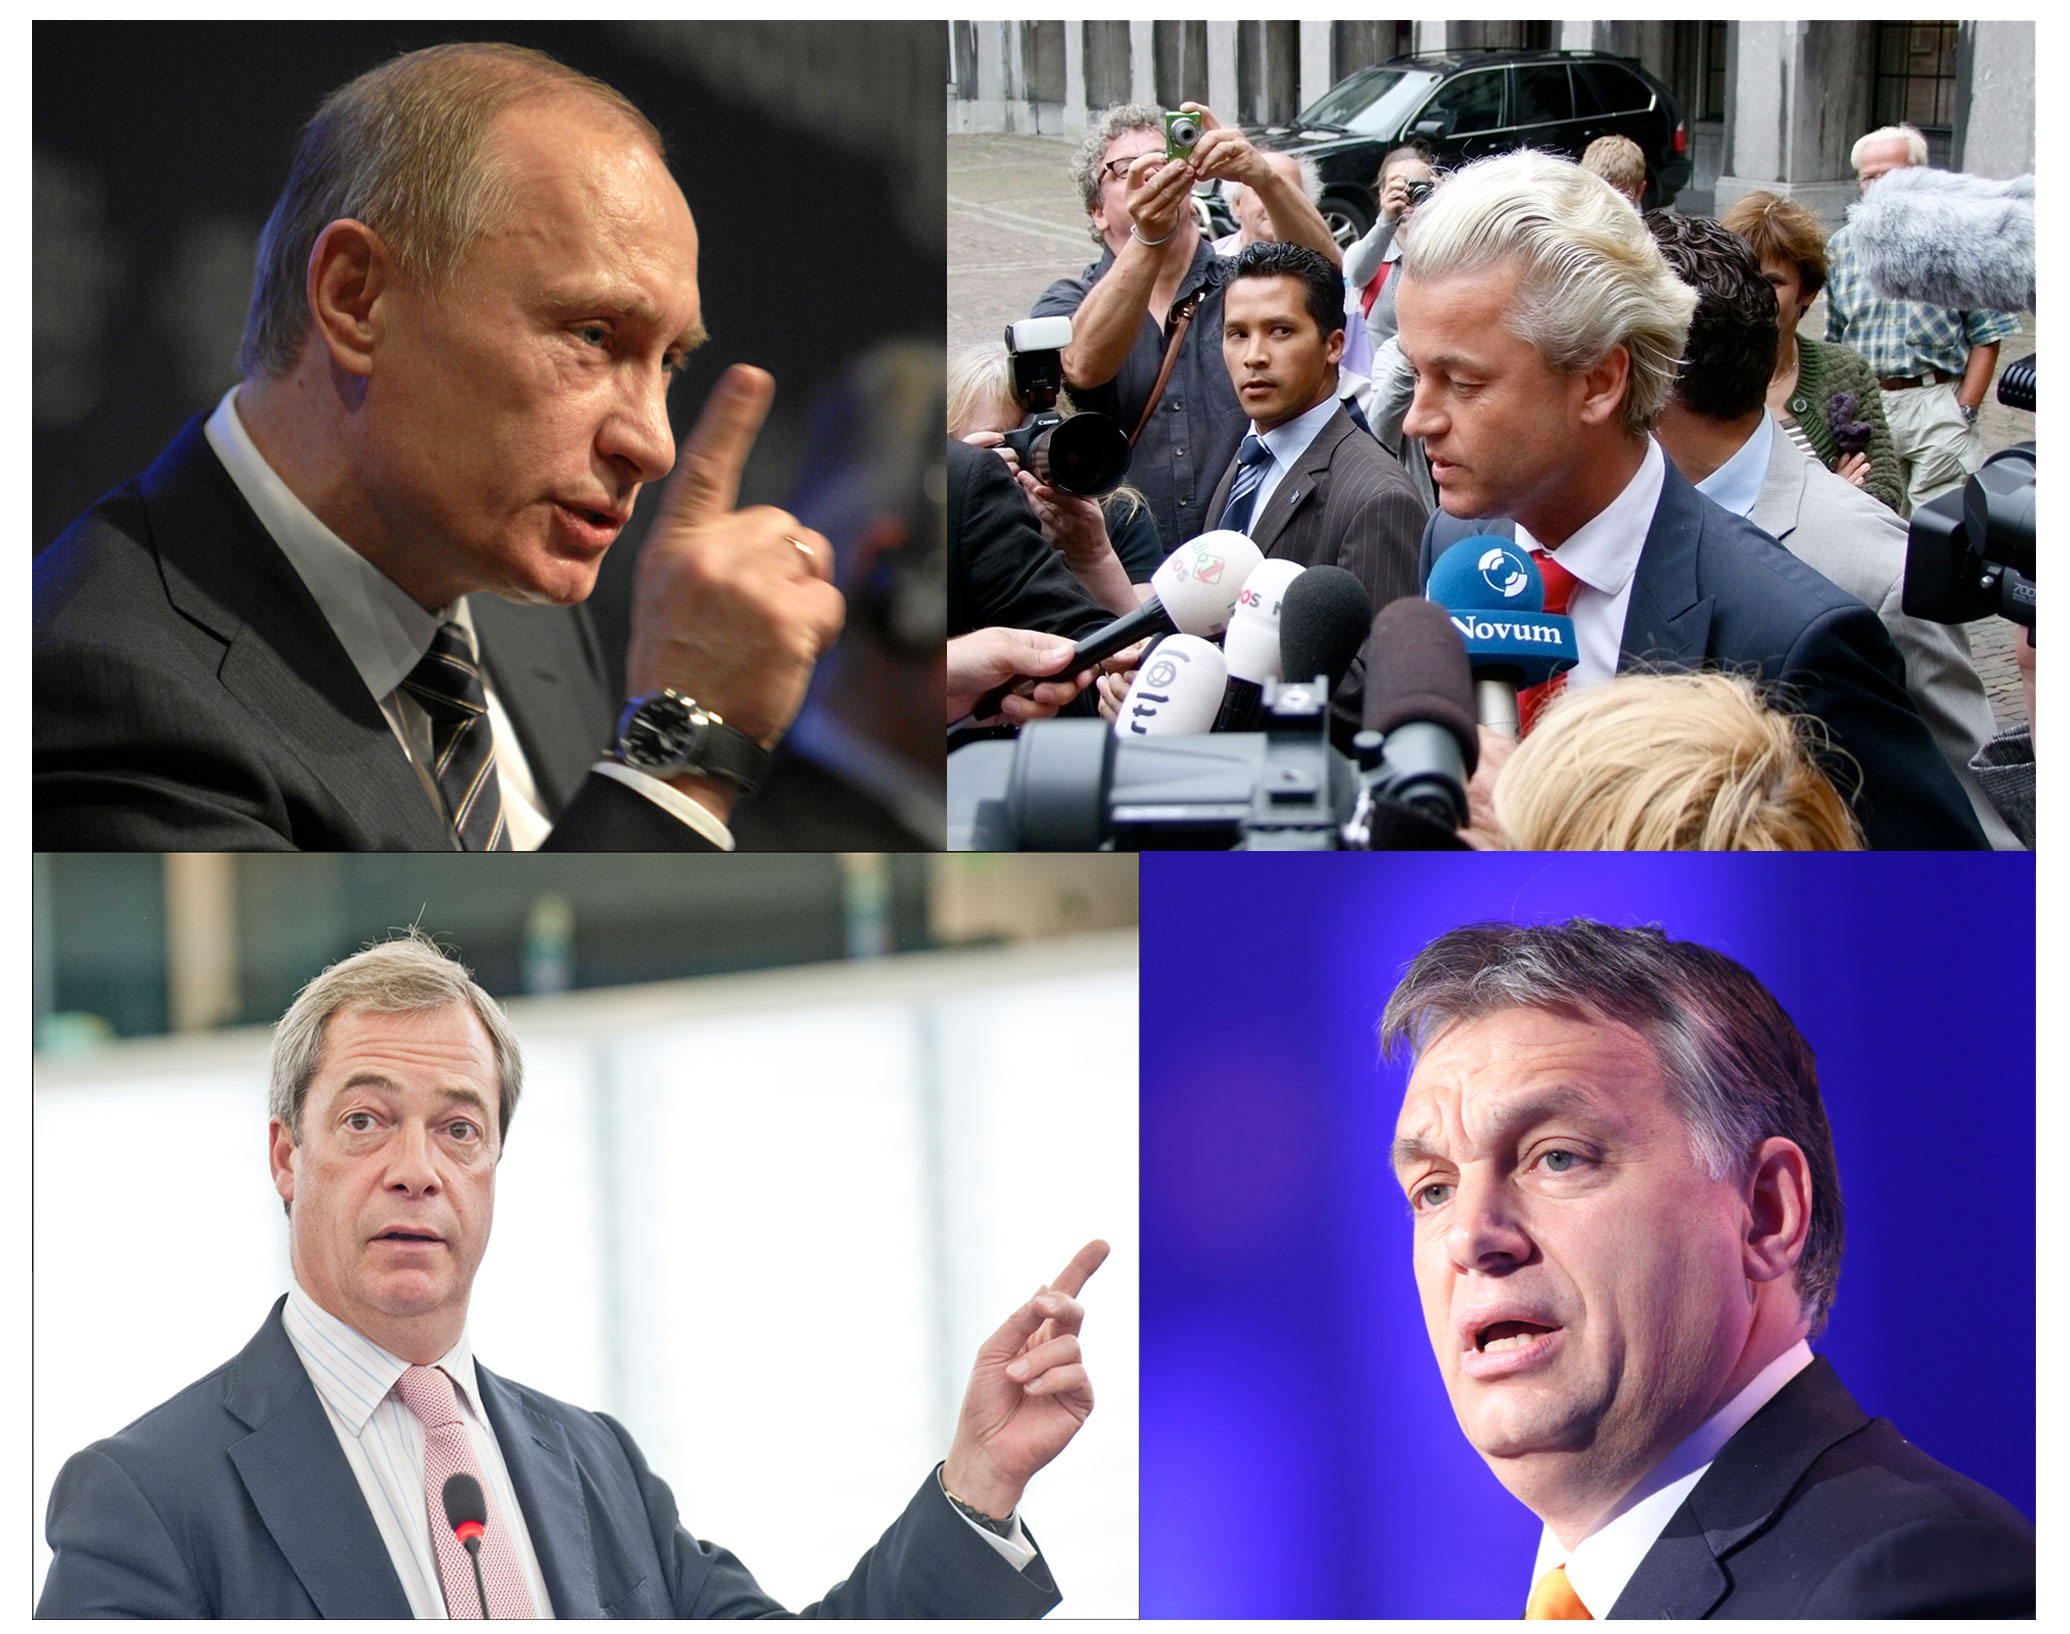 Putin’s Far-Right Politics Spreads Across Europe